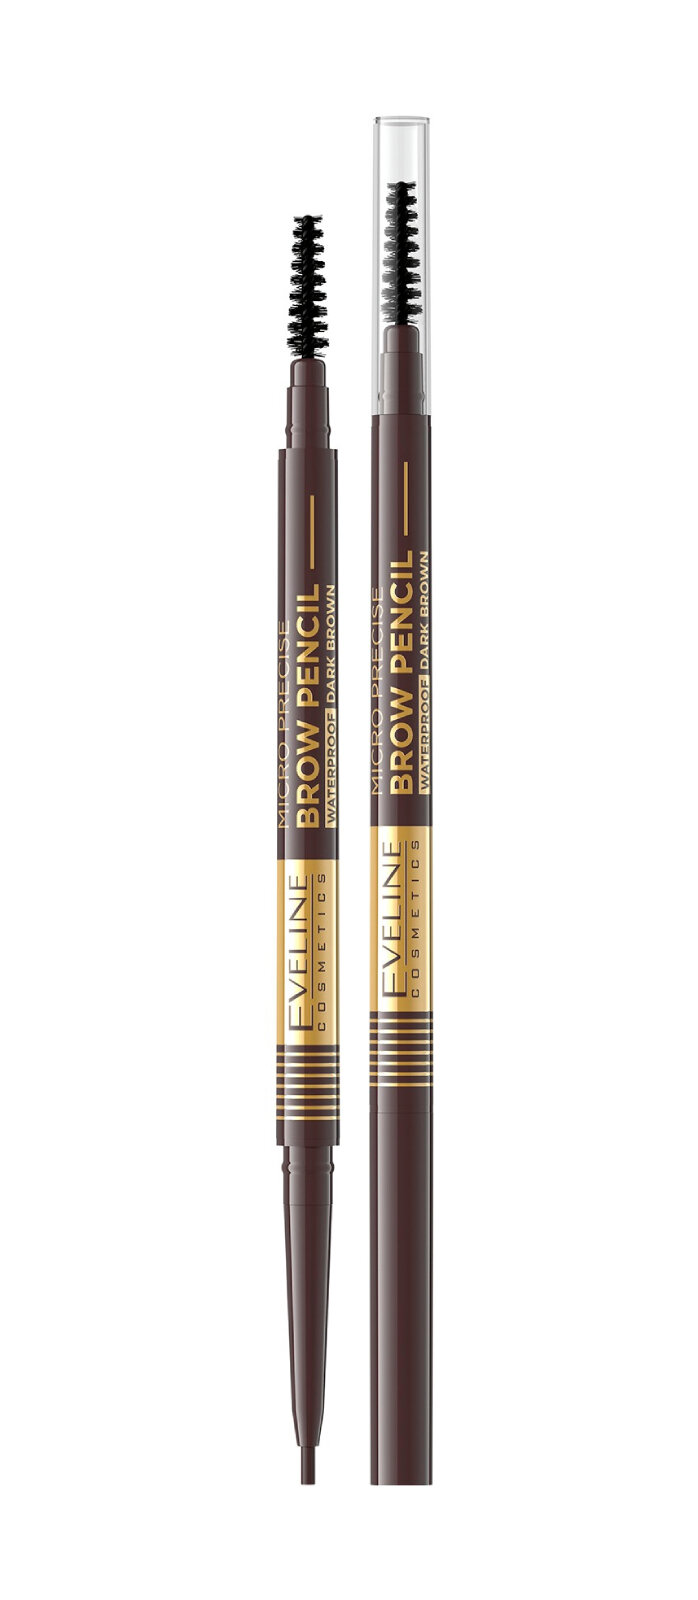 EVELINE Карандаш для бровей Micro Precise Brow Pencil водостойкий, 5 г, 03 Dark Brown